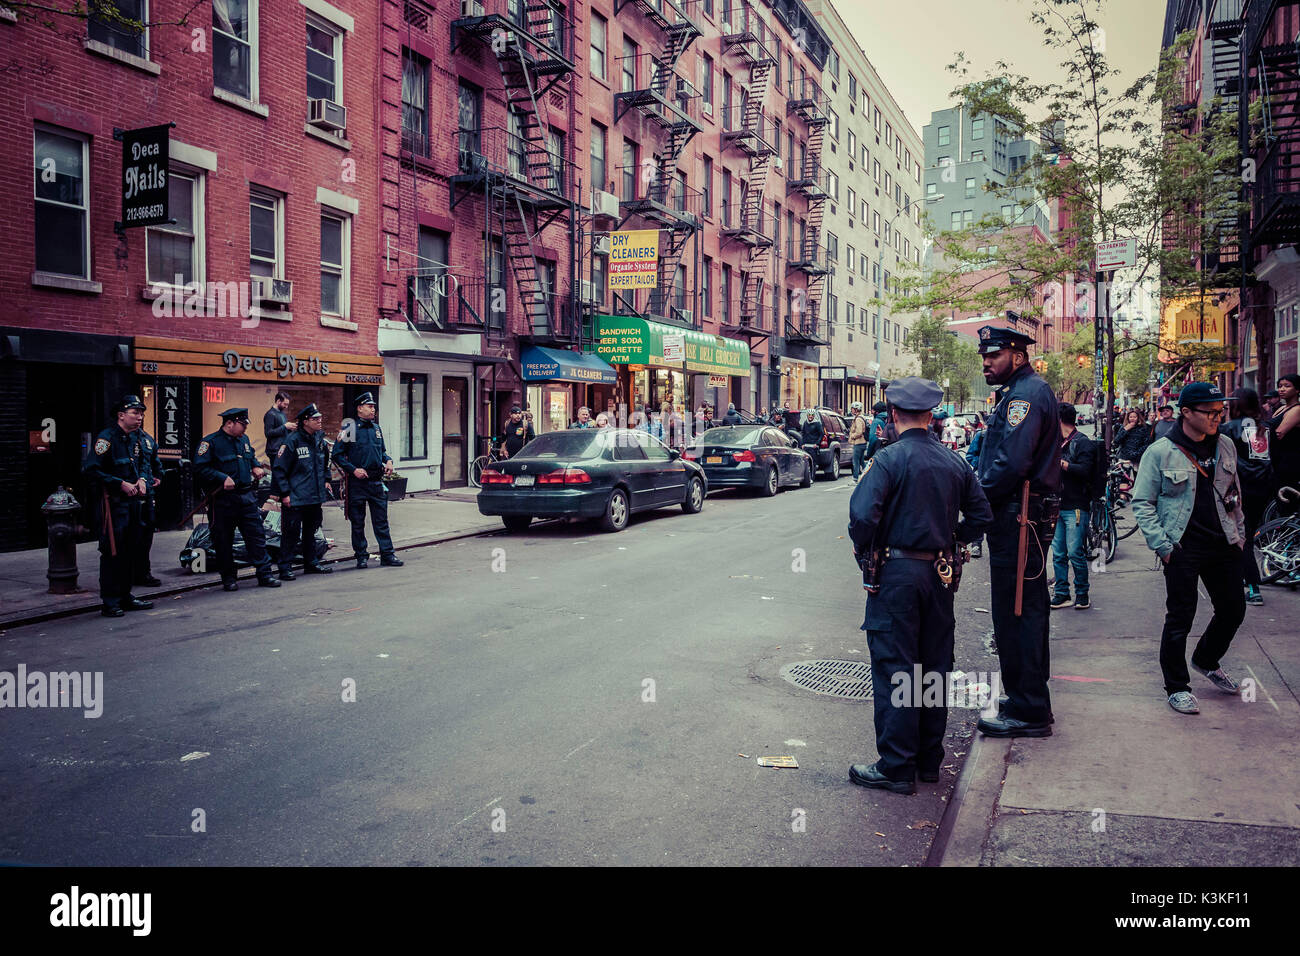 NYPD, Polizisten in Red Hook Crit Bike Event in Chrom Industries, Manhatten, New York, USA Stockfoto